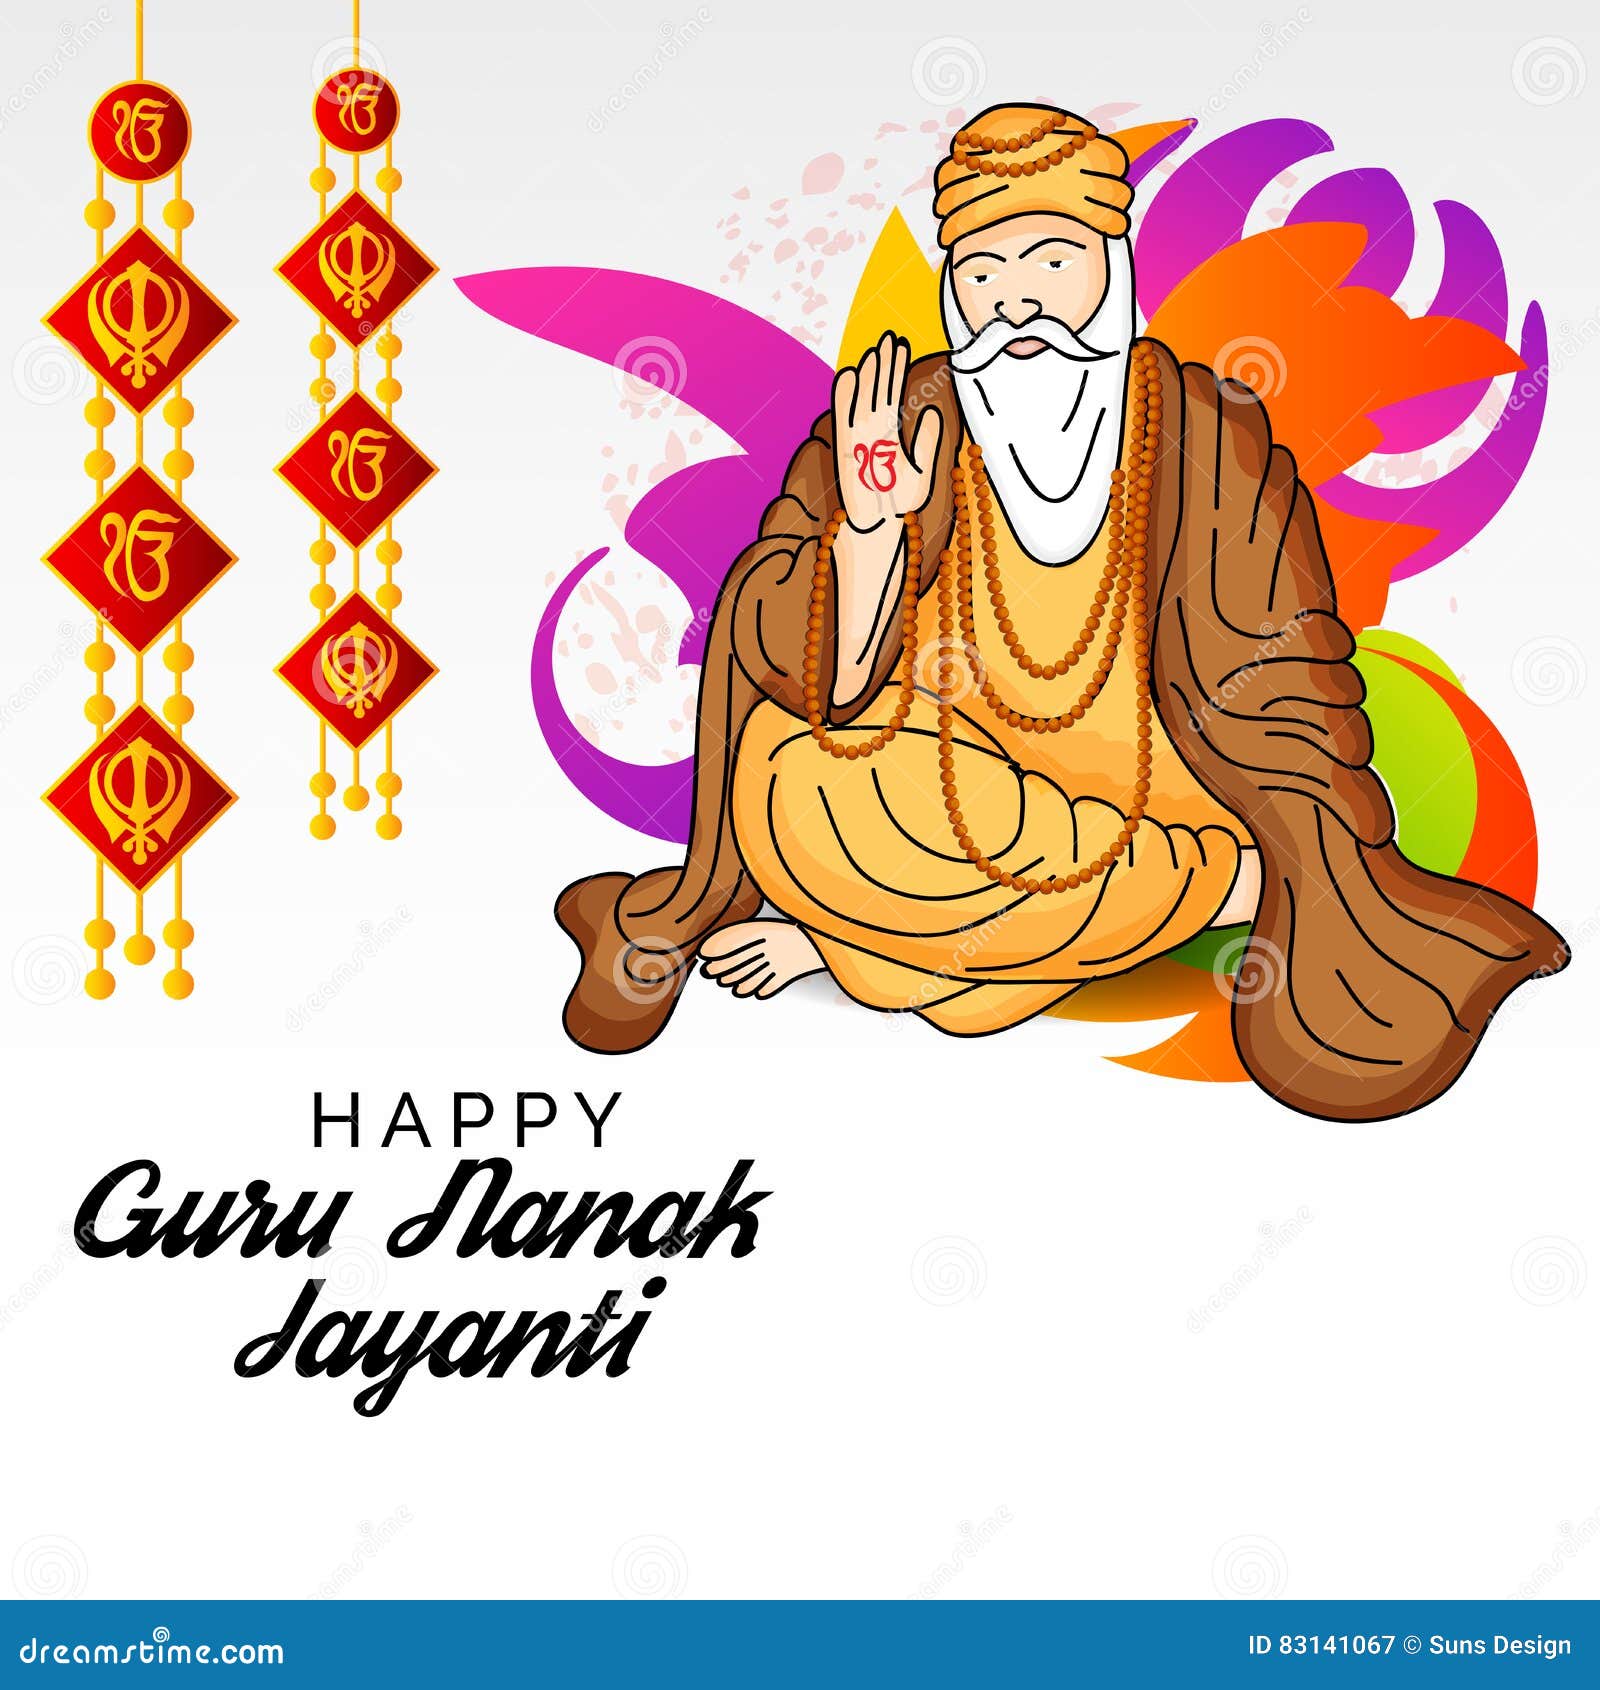 Guru Nanak Jayanti banner stock illustration. Illustration of ...